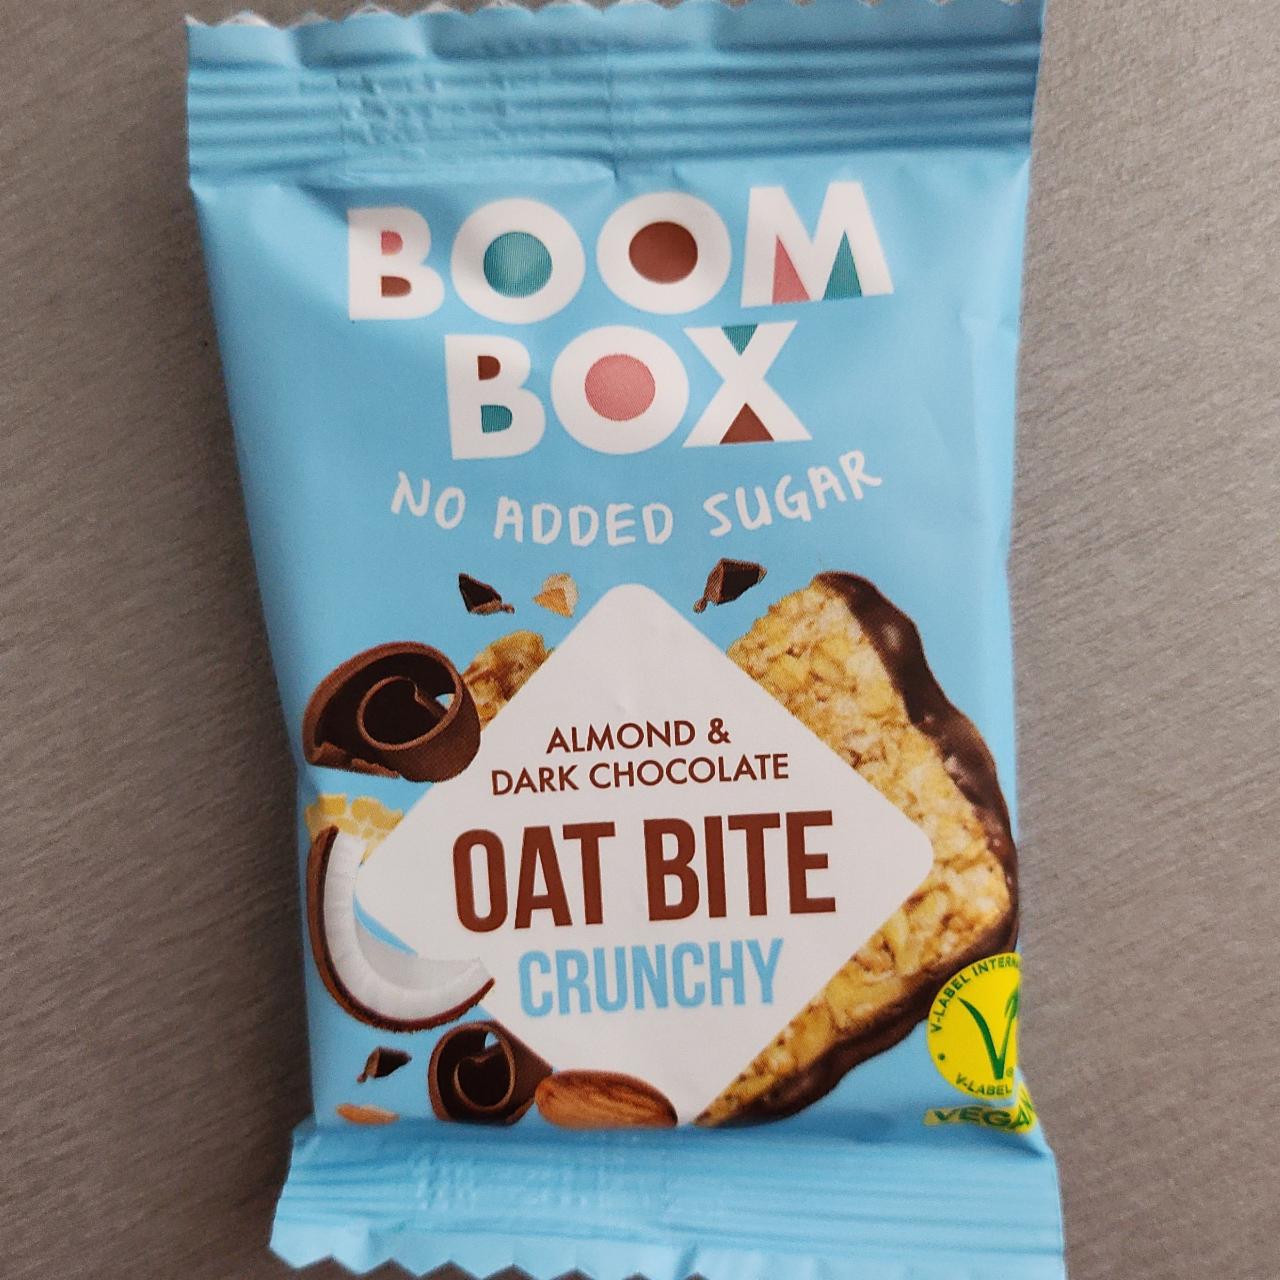 Fotografie - Oat Bite Crunchy Almond & Dark Chocolate Boom Box